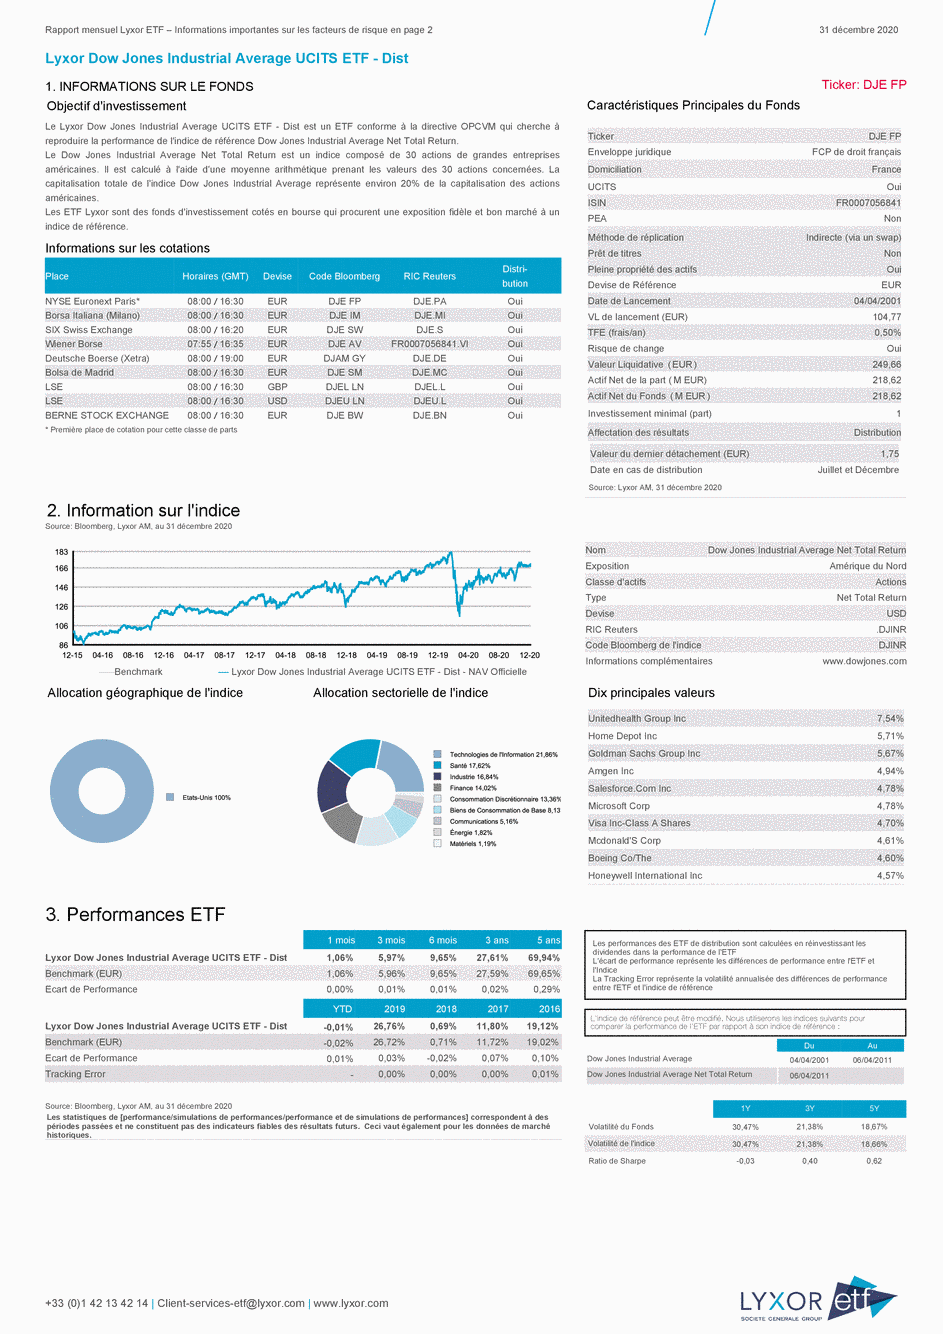 Reporting Lyxor Dow Jones Industrial Average UCITS ETF - Dist - 31/12/2020 - Français